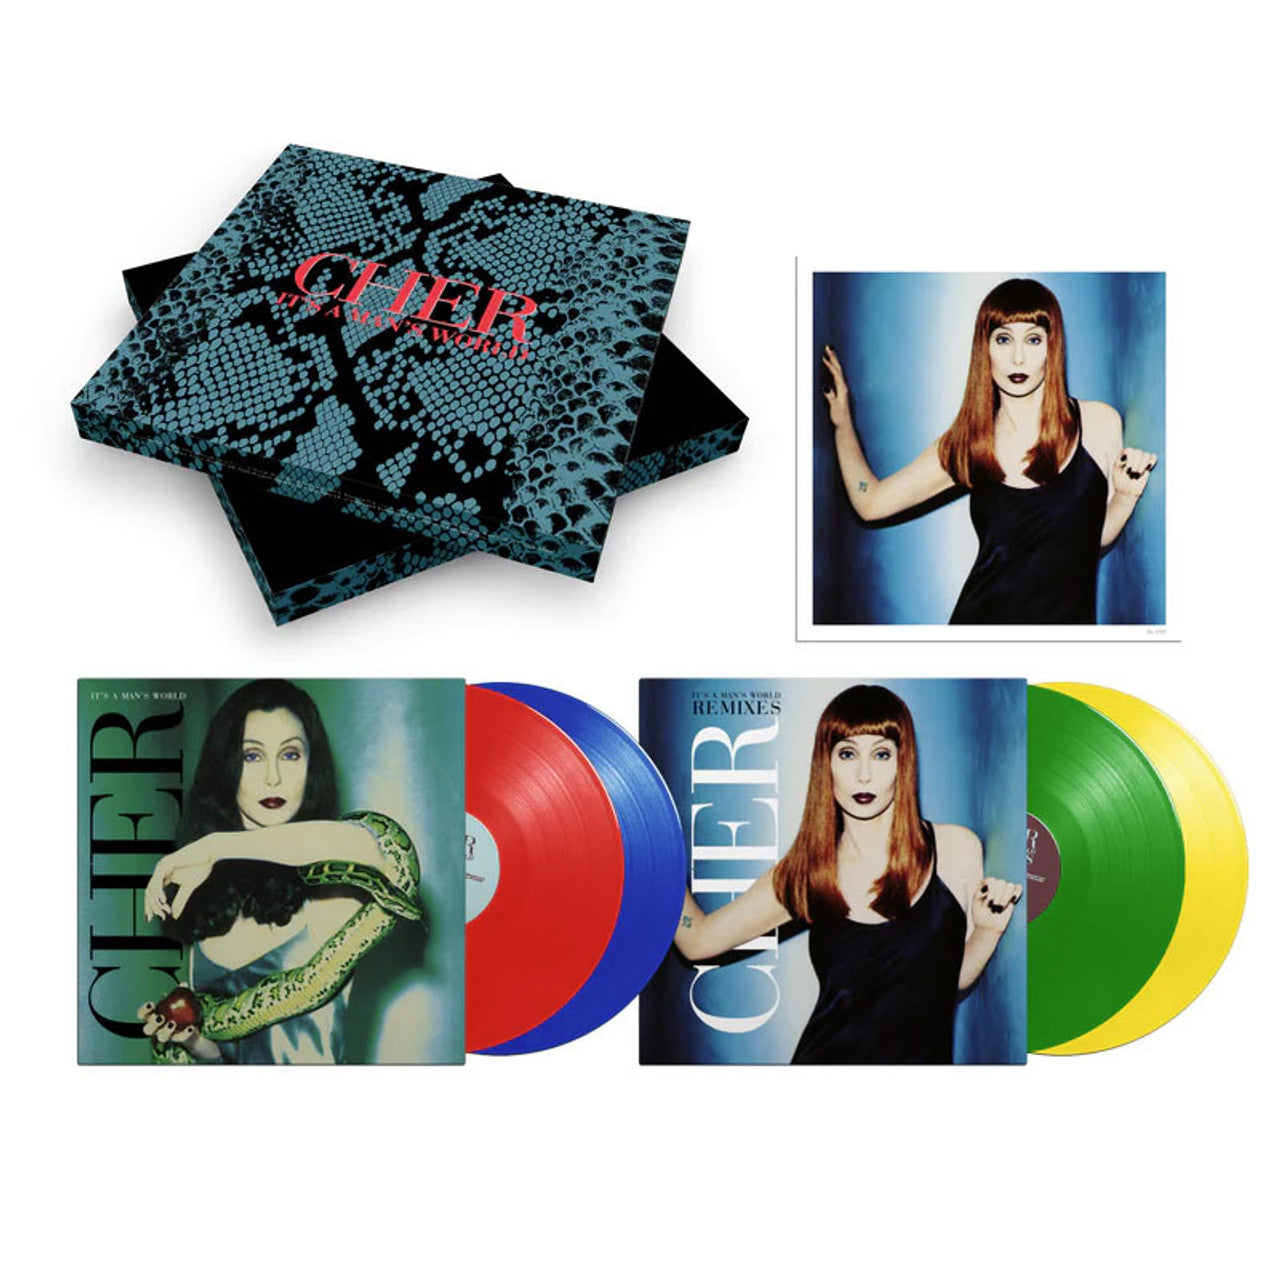 Cher - It's A Man's World [4LP] (Deluxe Edition, remastered, bonus remixes) Colored Vinyl